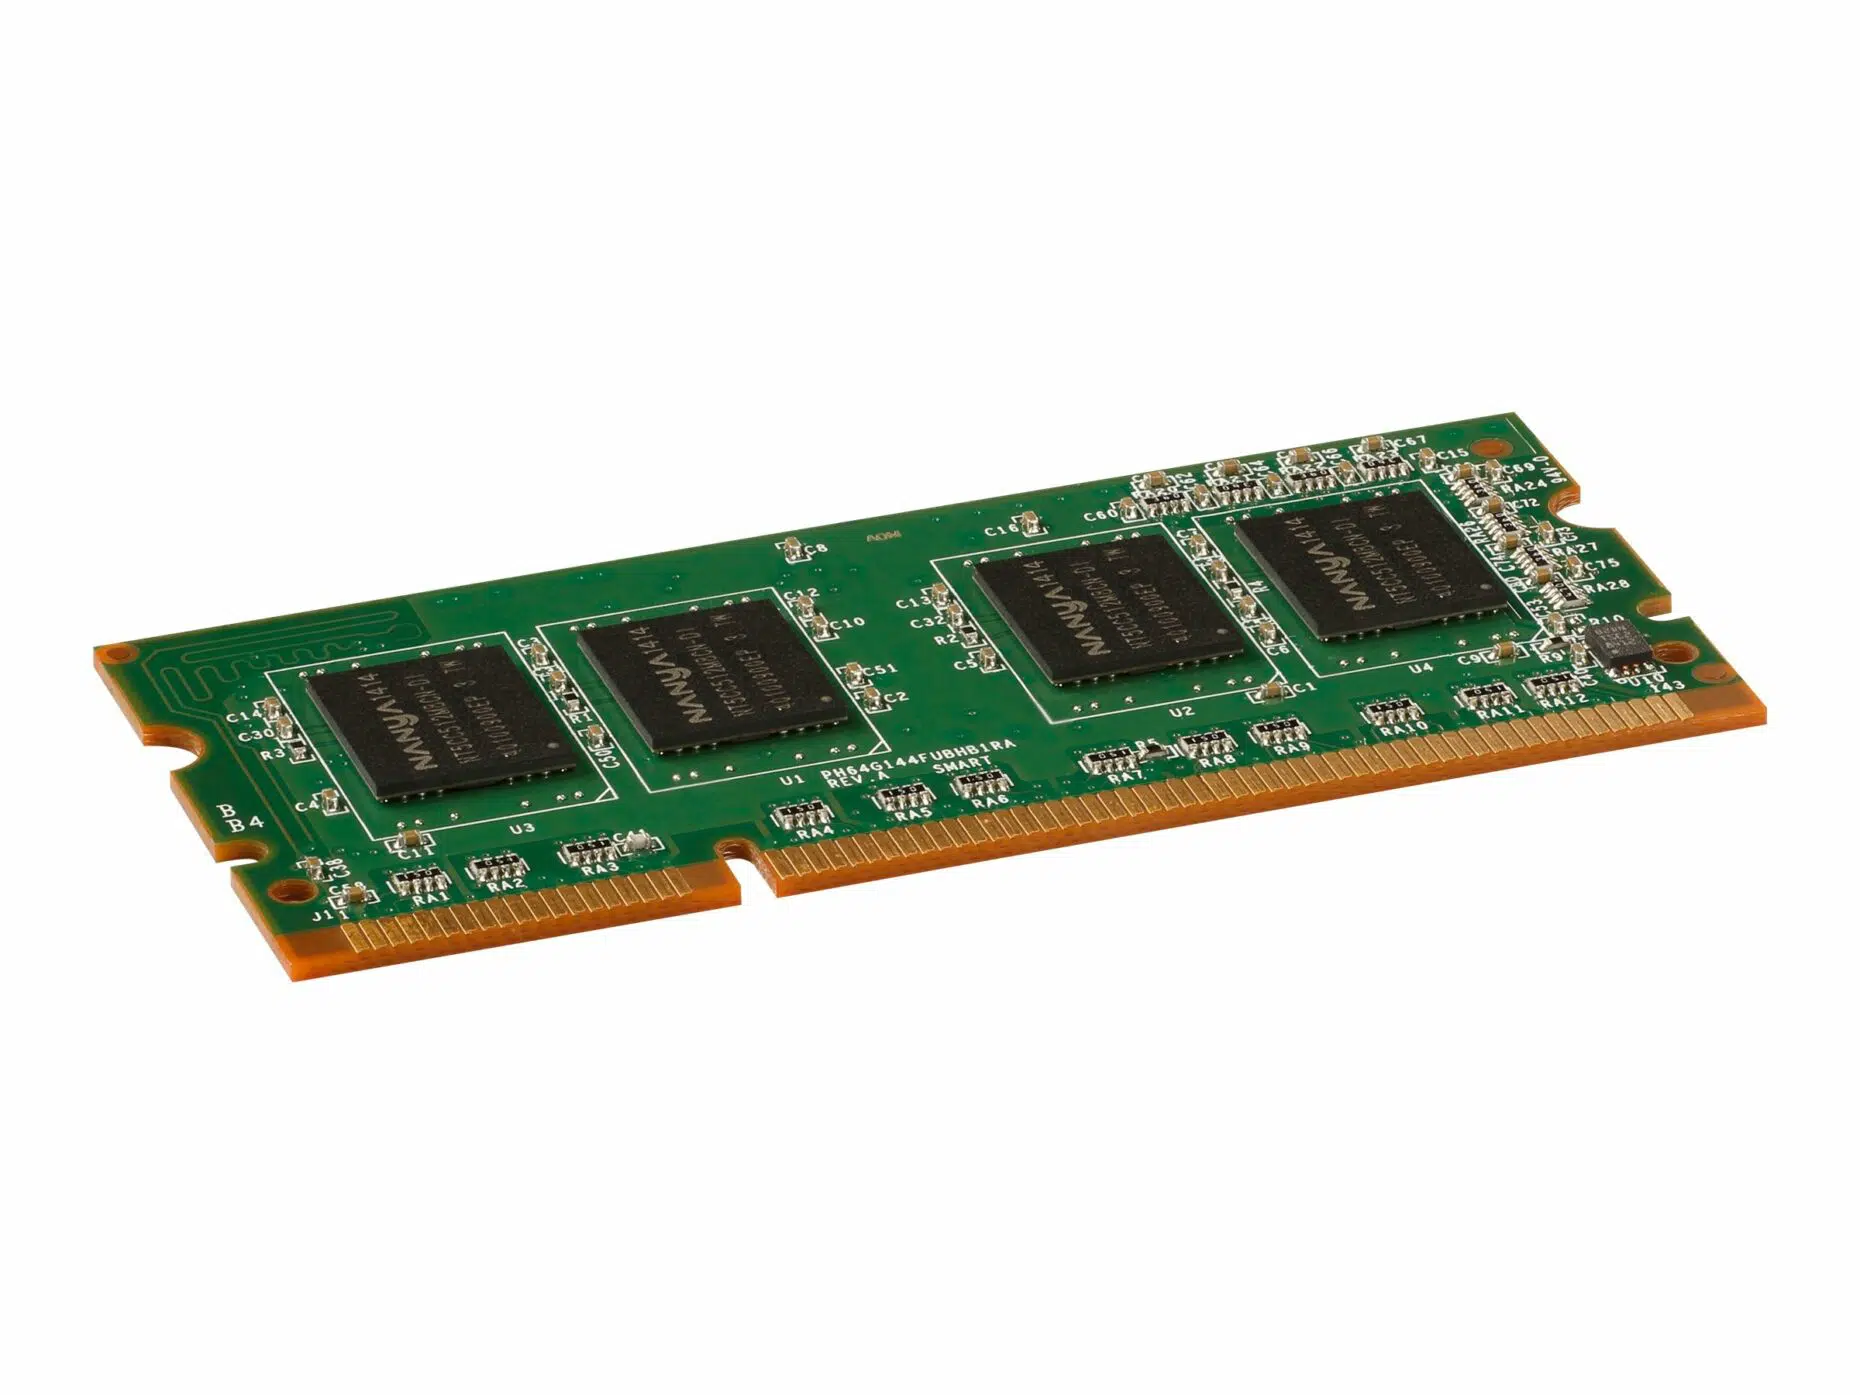 HP - DDR3 - 2 GB - SO-DIMM 144-pin - 800 MHz / PC3-6400 - Ram